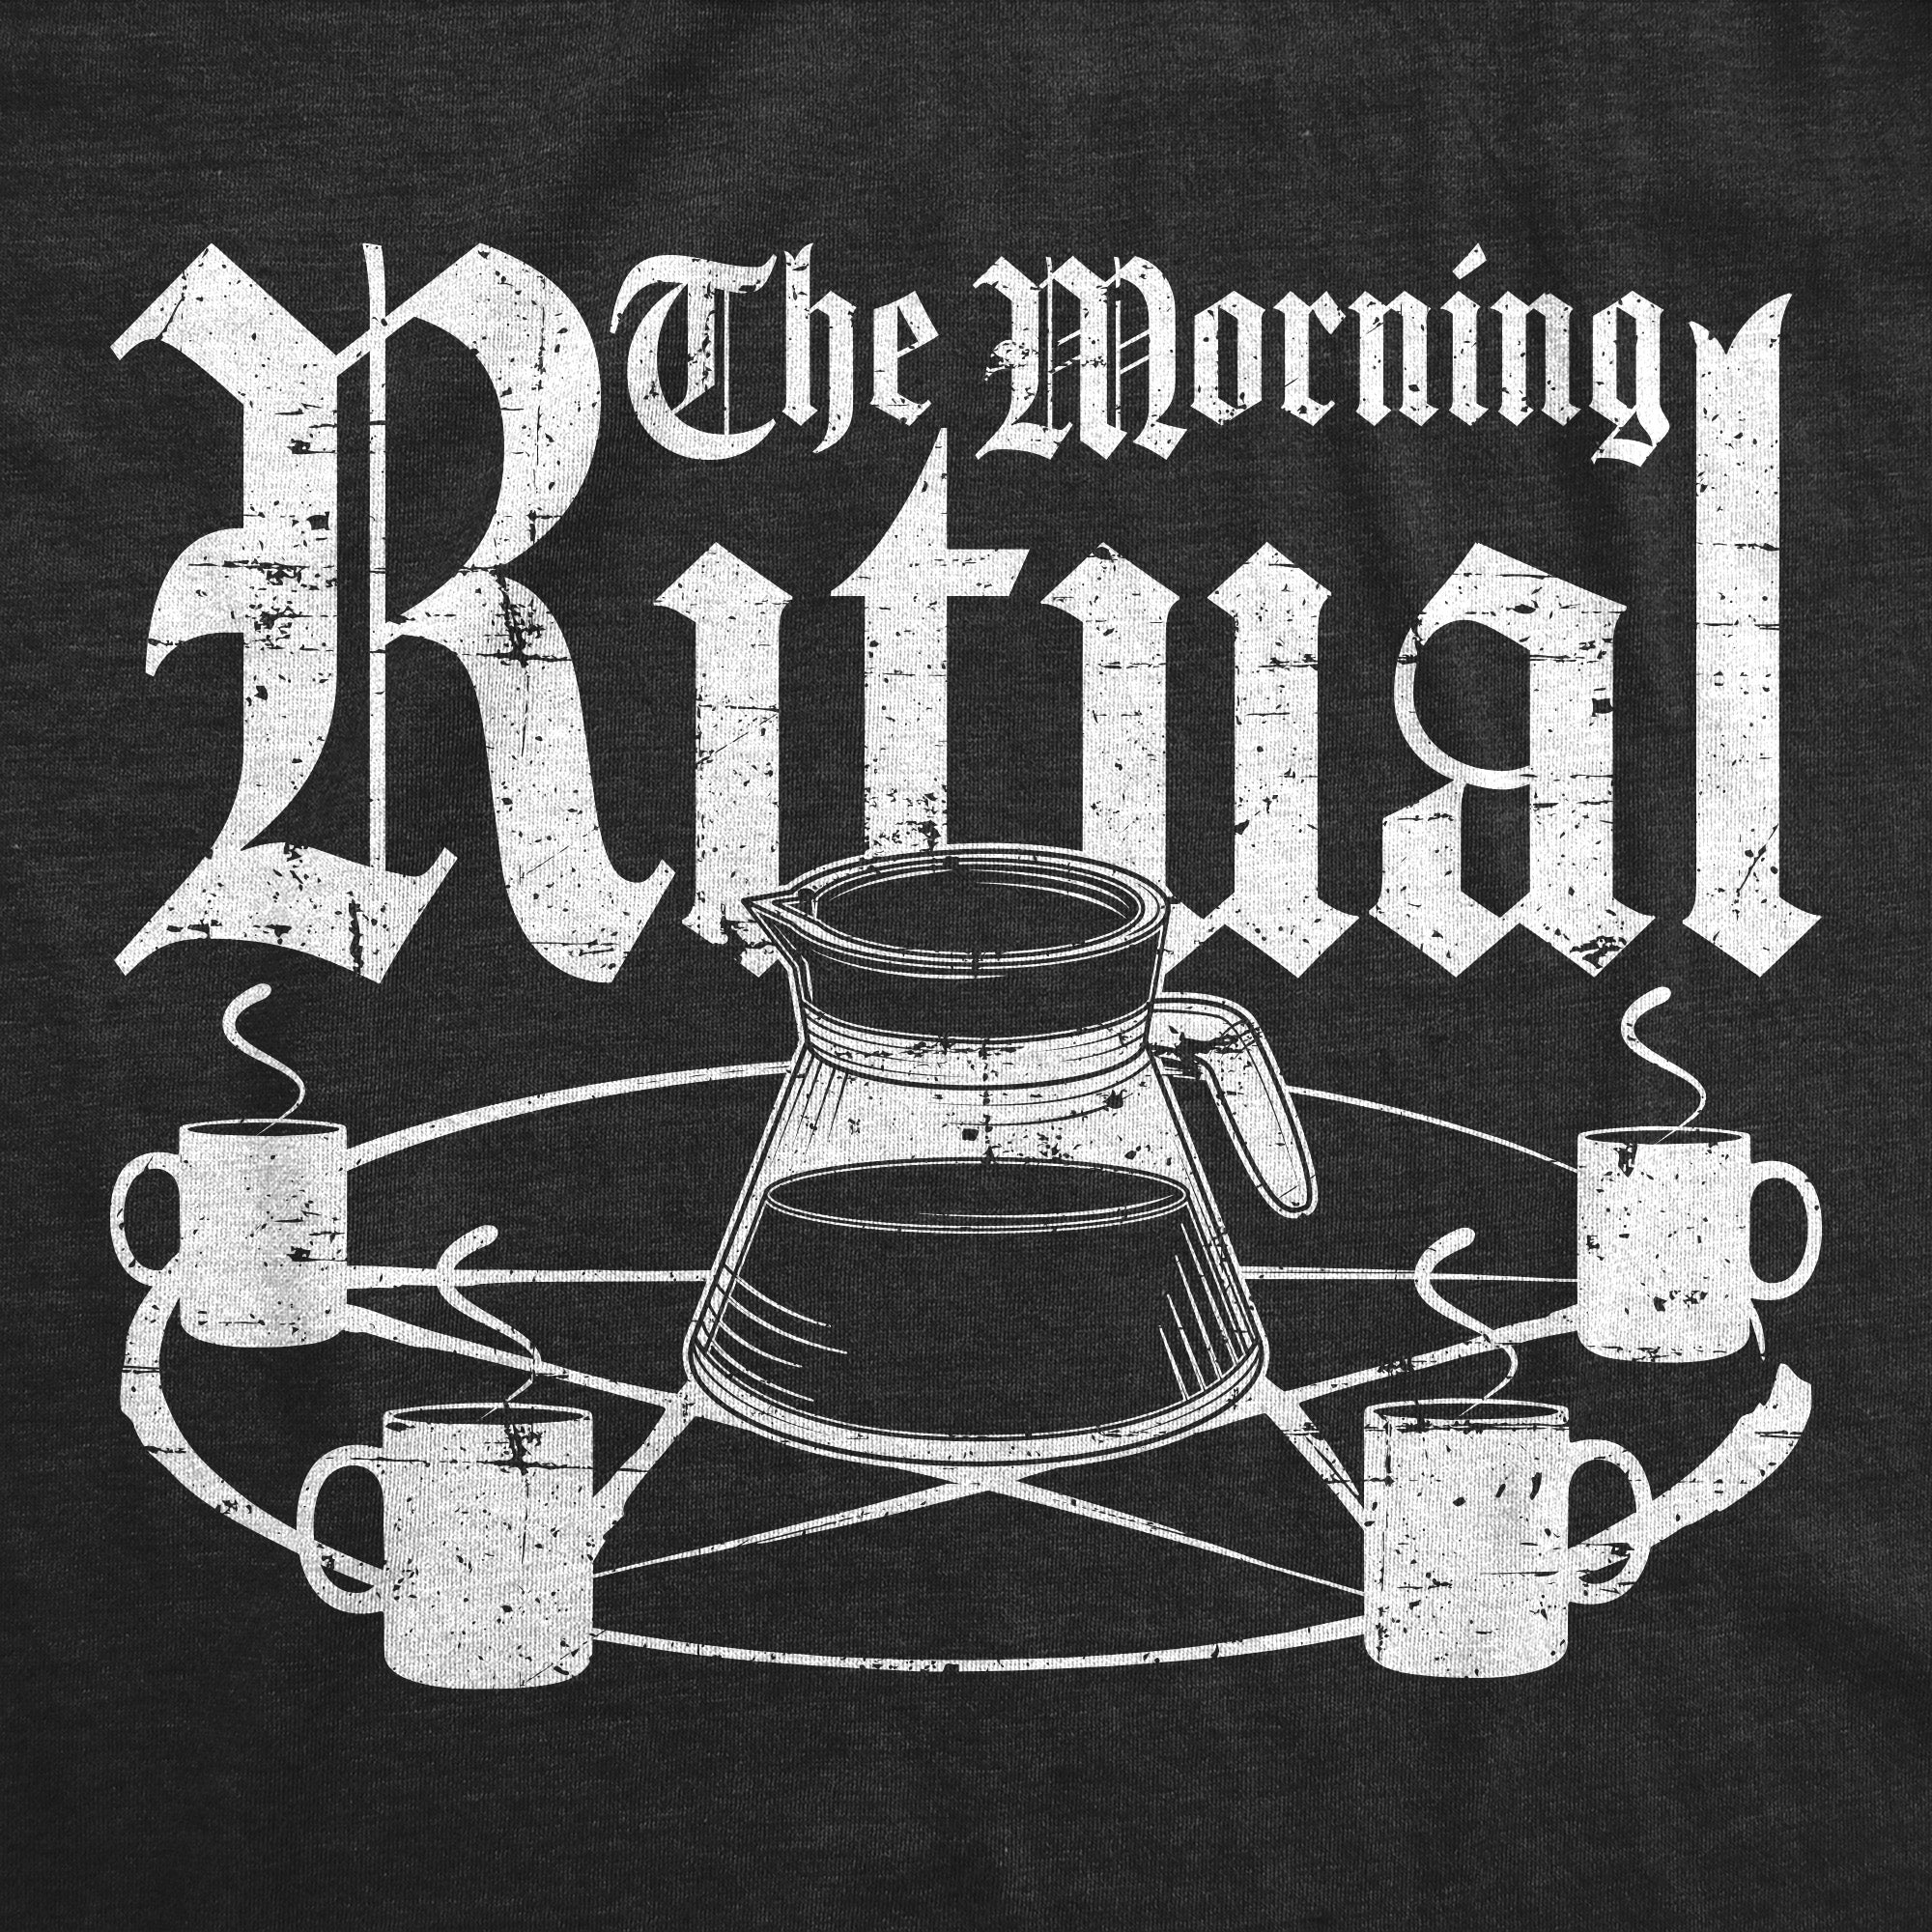 Funny Heather Black - RITUAL The Morning Ritual Womens T Shirt Nerdy Coffee sarcastic Tee